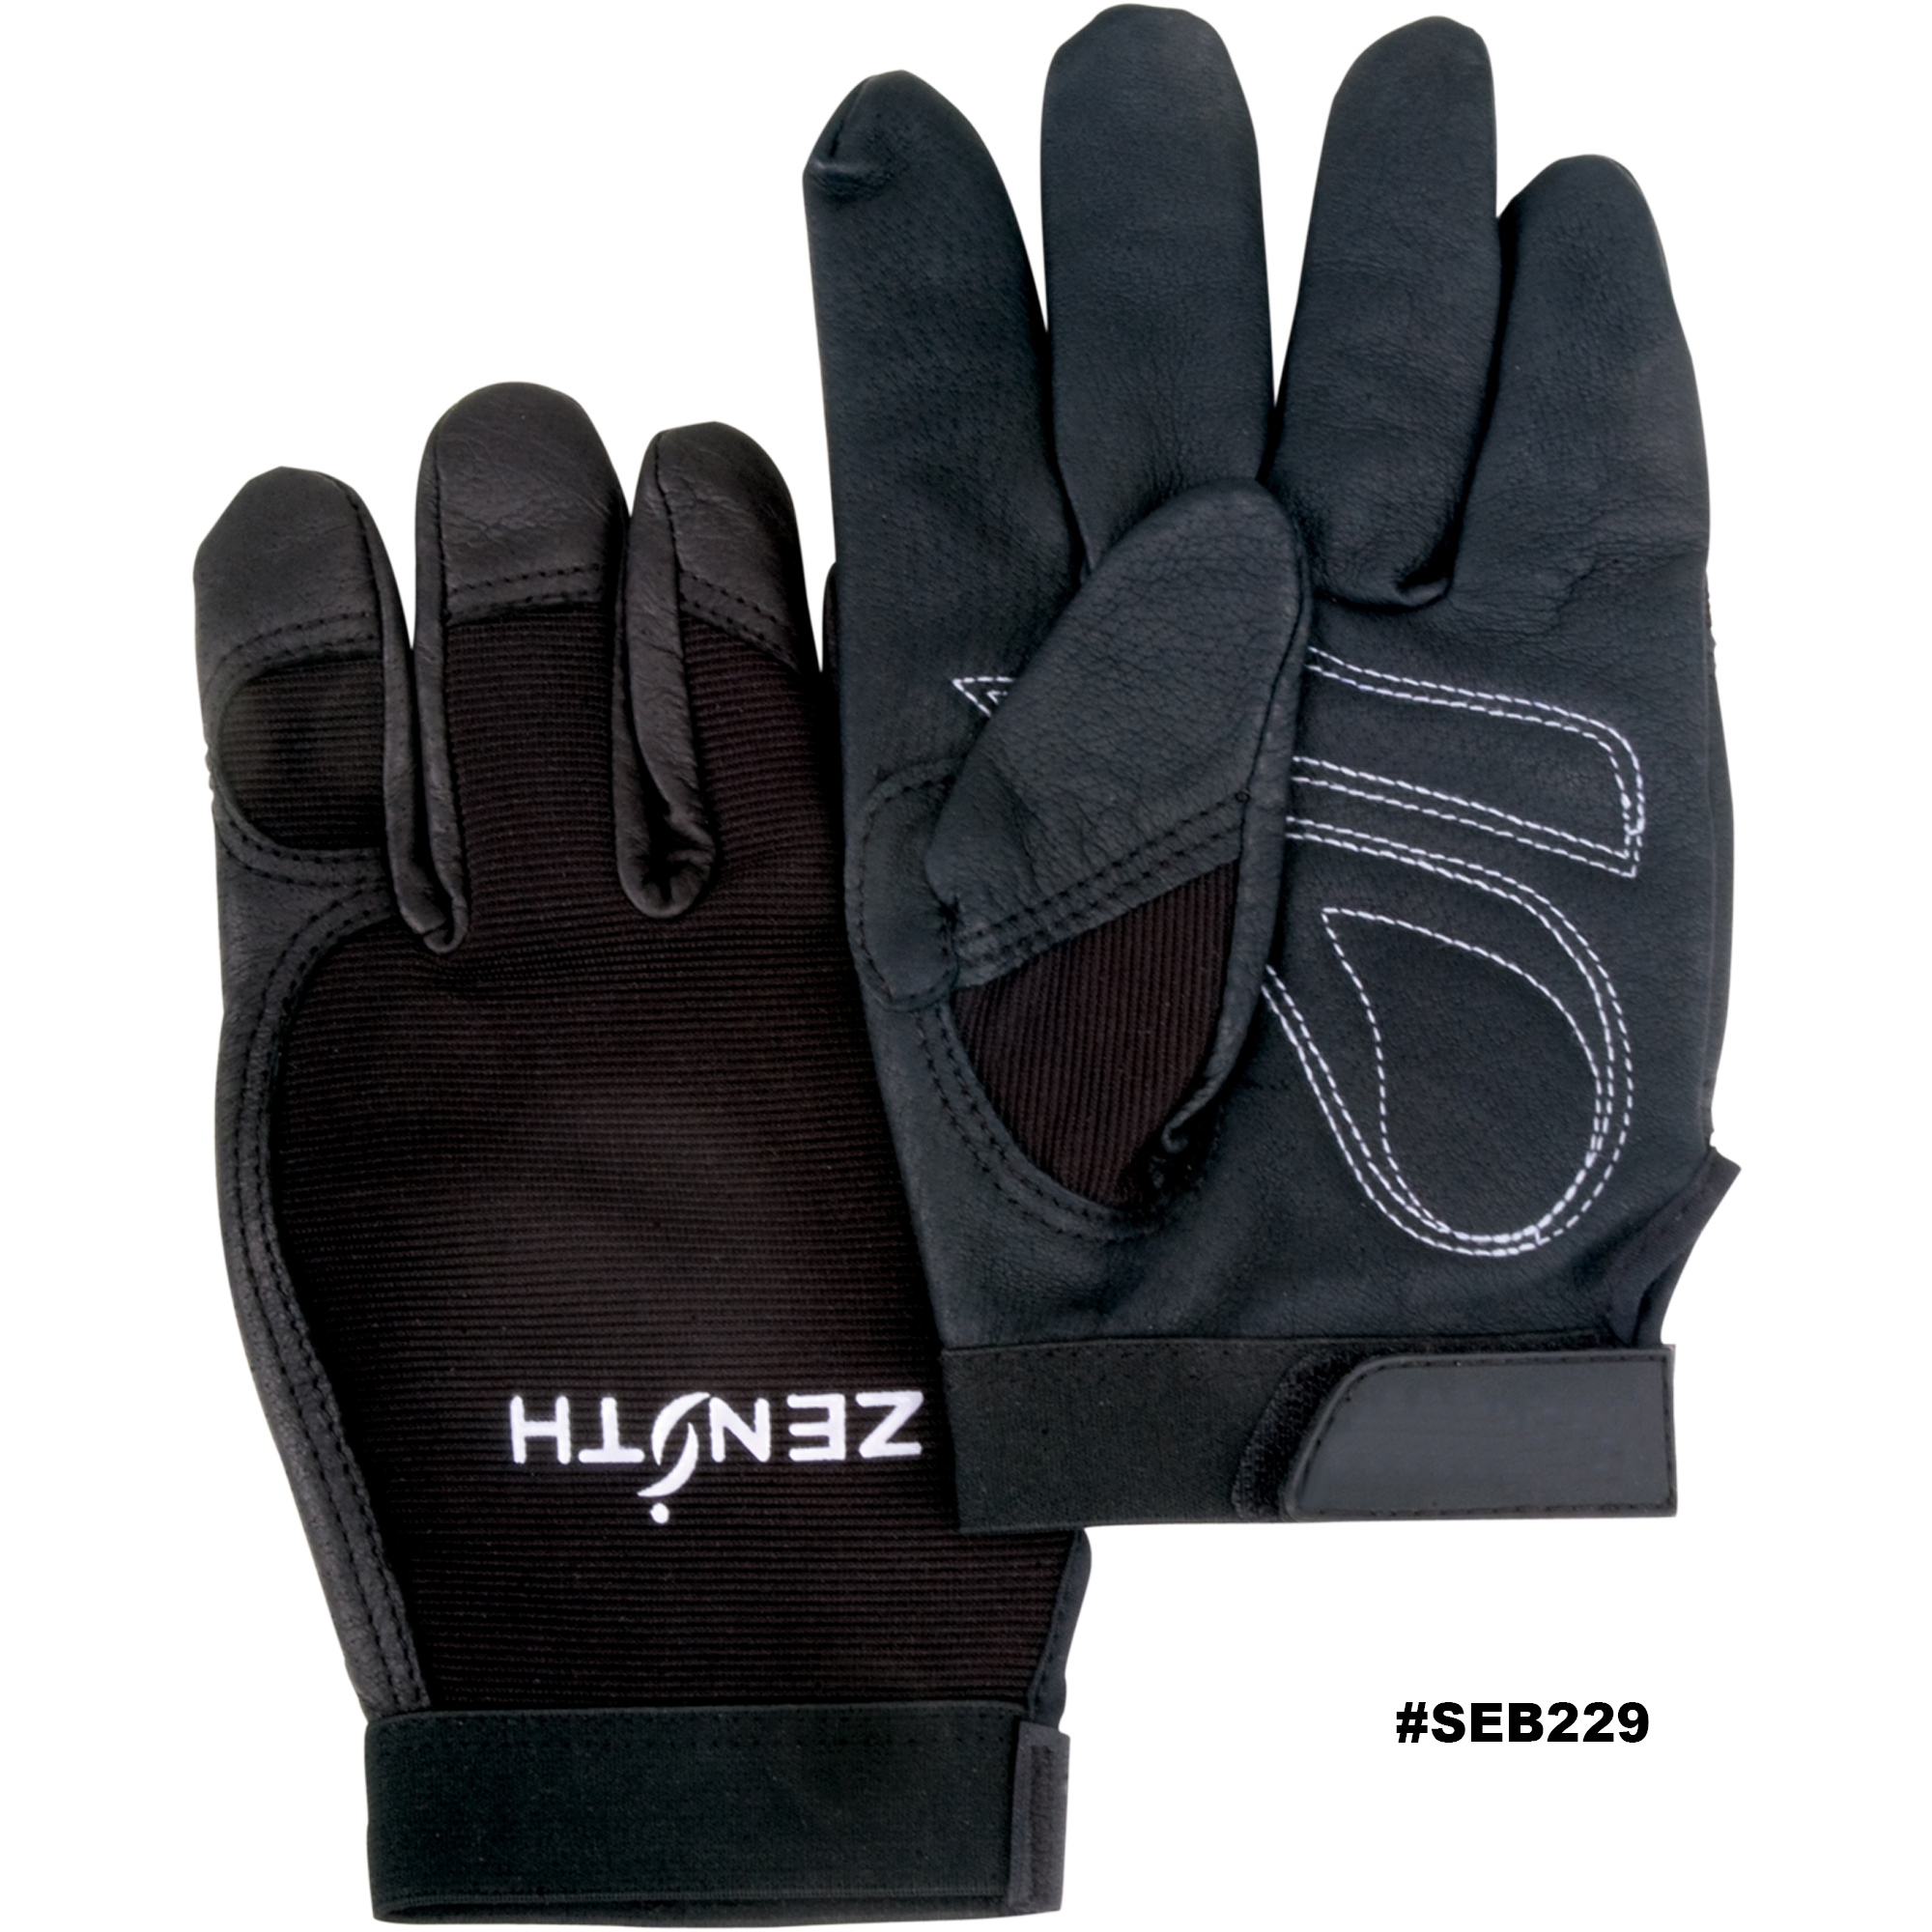 Zenith ZM300 Mechanic Gloves, Grain Cowhide Palm, Size Large Model: SEB229